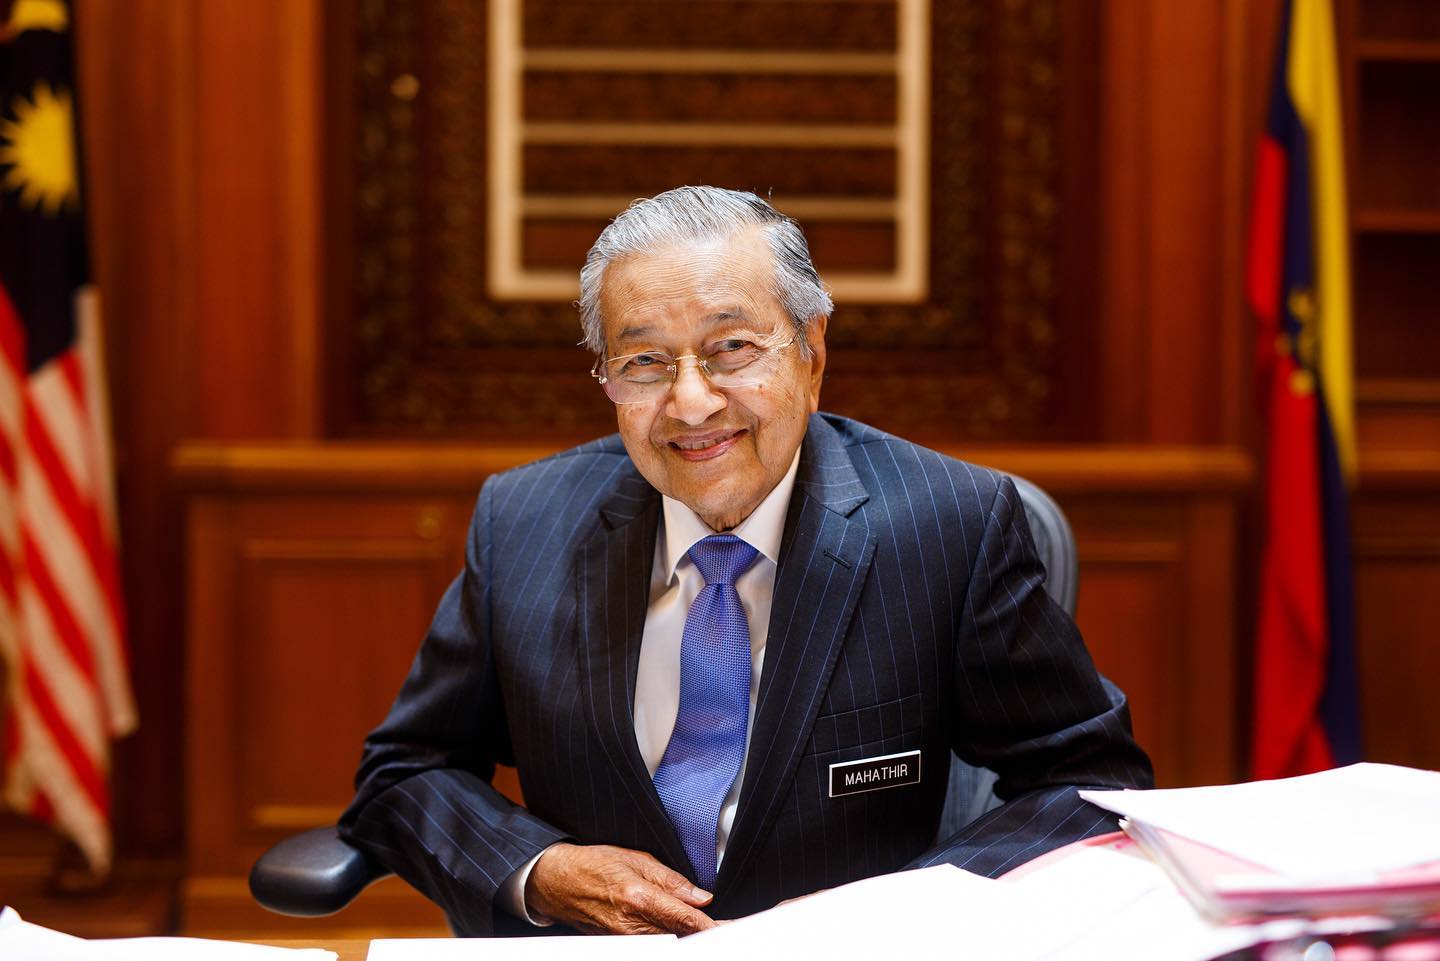 Министр малайзии. Премьер-министр Малайзии Махатхир Мохамад. Махатхир Бин Мохамад Искандар. Махатхир Мохамад 2022. Махатхир Мохамад премьер-министр Малайзии фото.